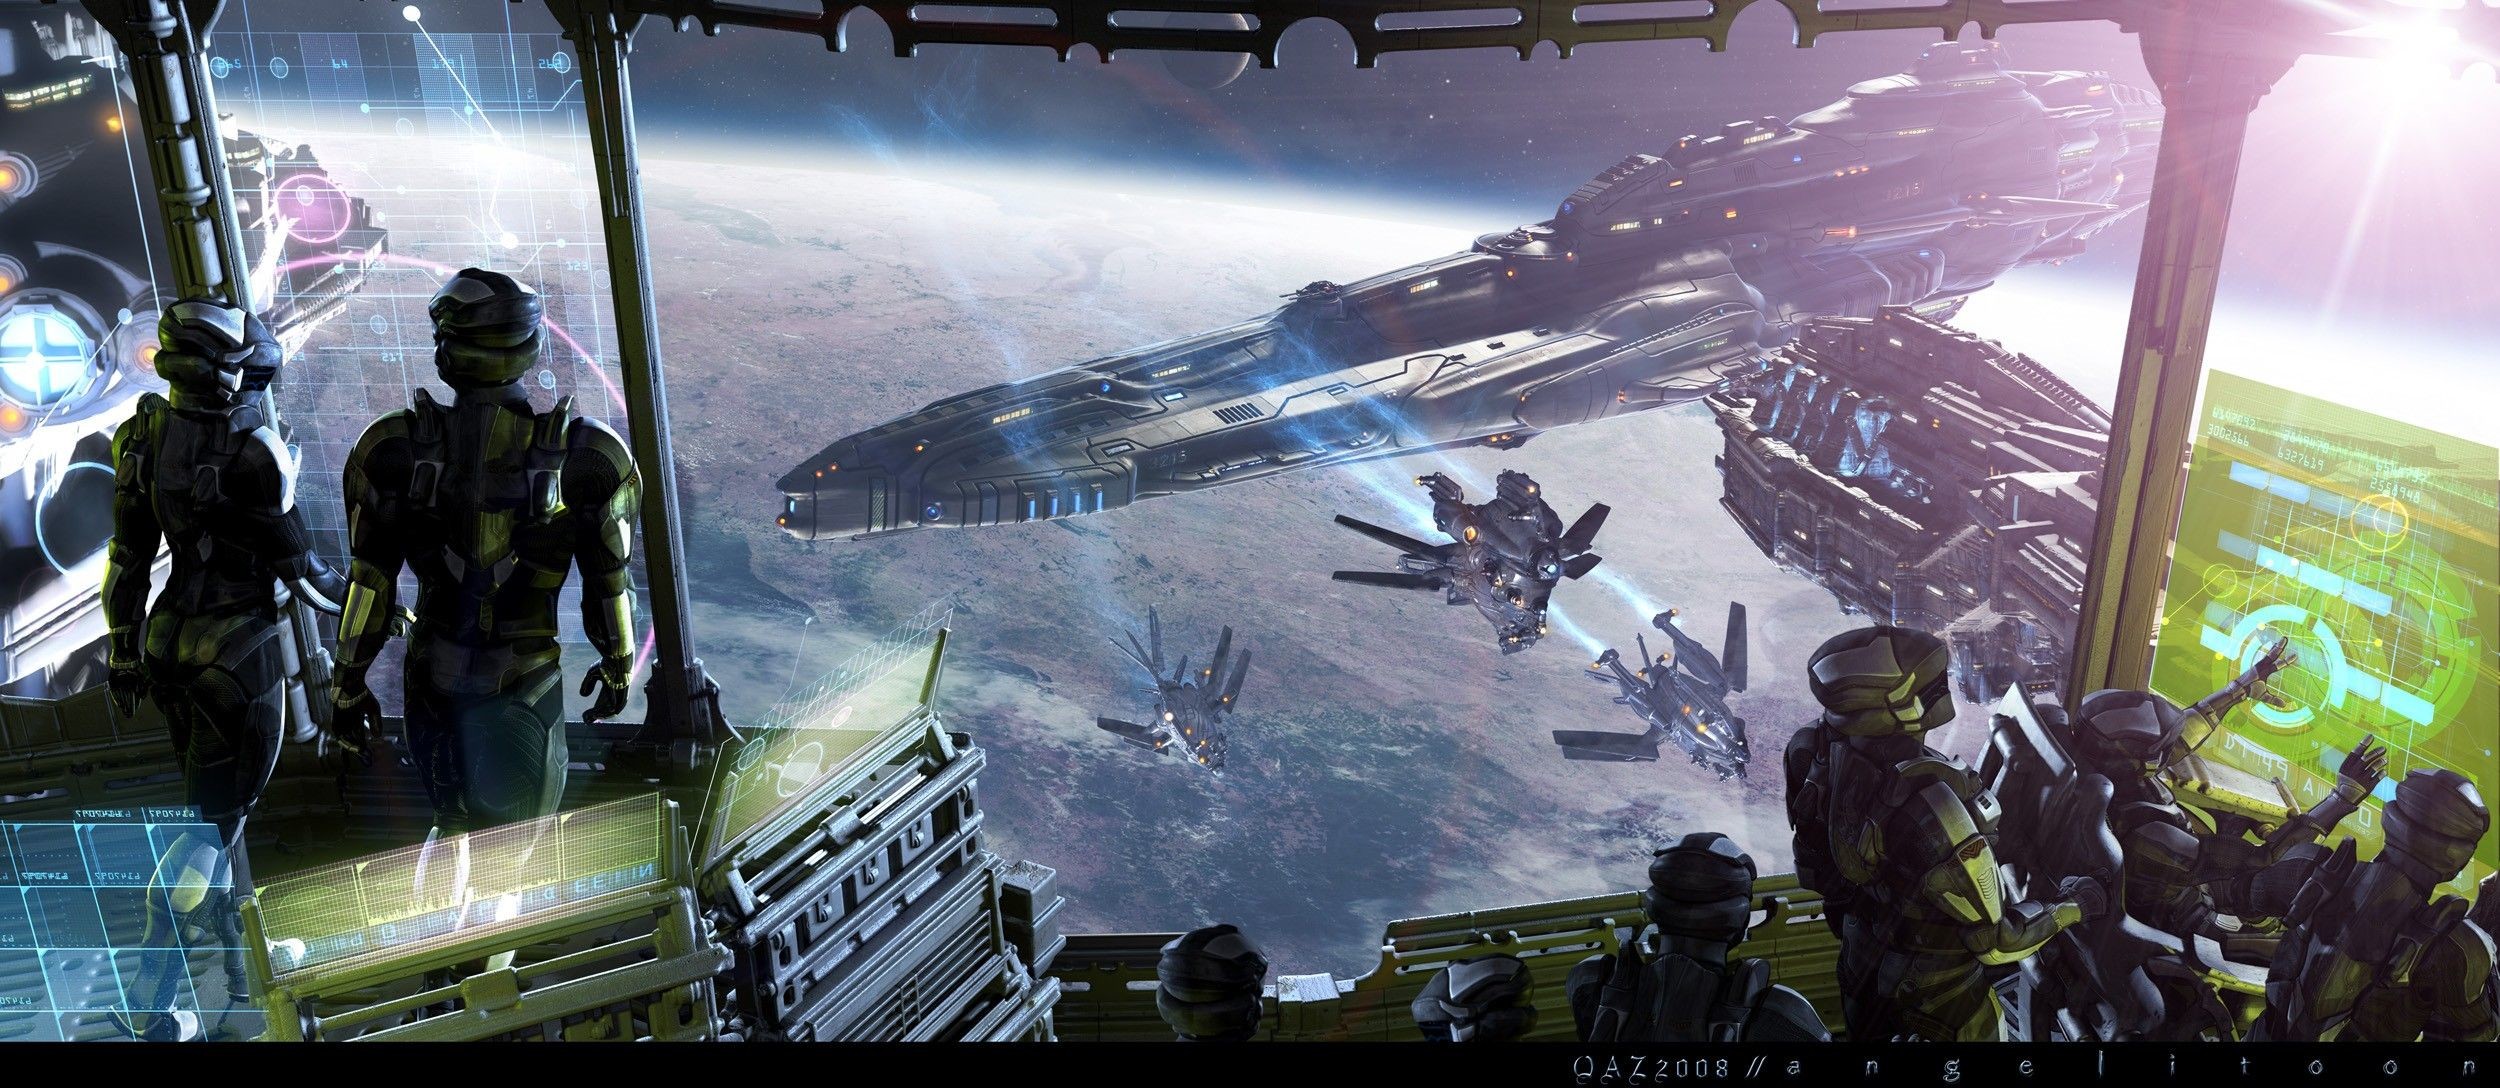 2500x1088 Sci Fi Spaceship Wallpaper | Sci-fi Art | Pinterest | Spaceships